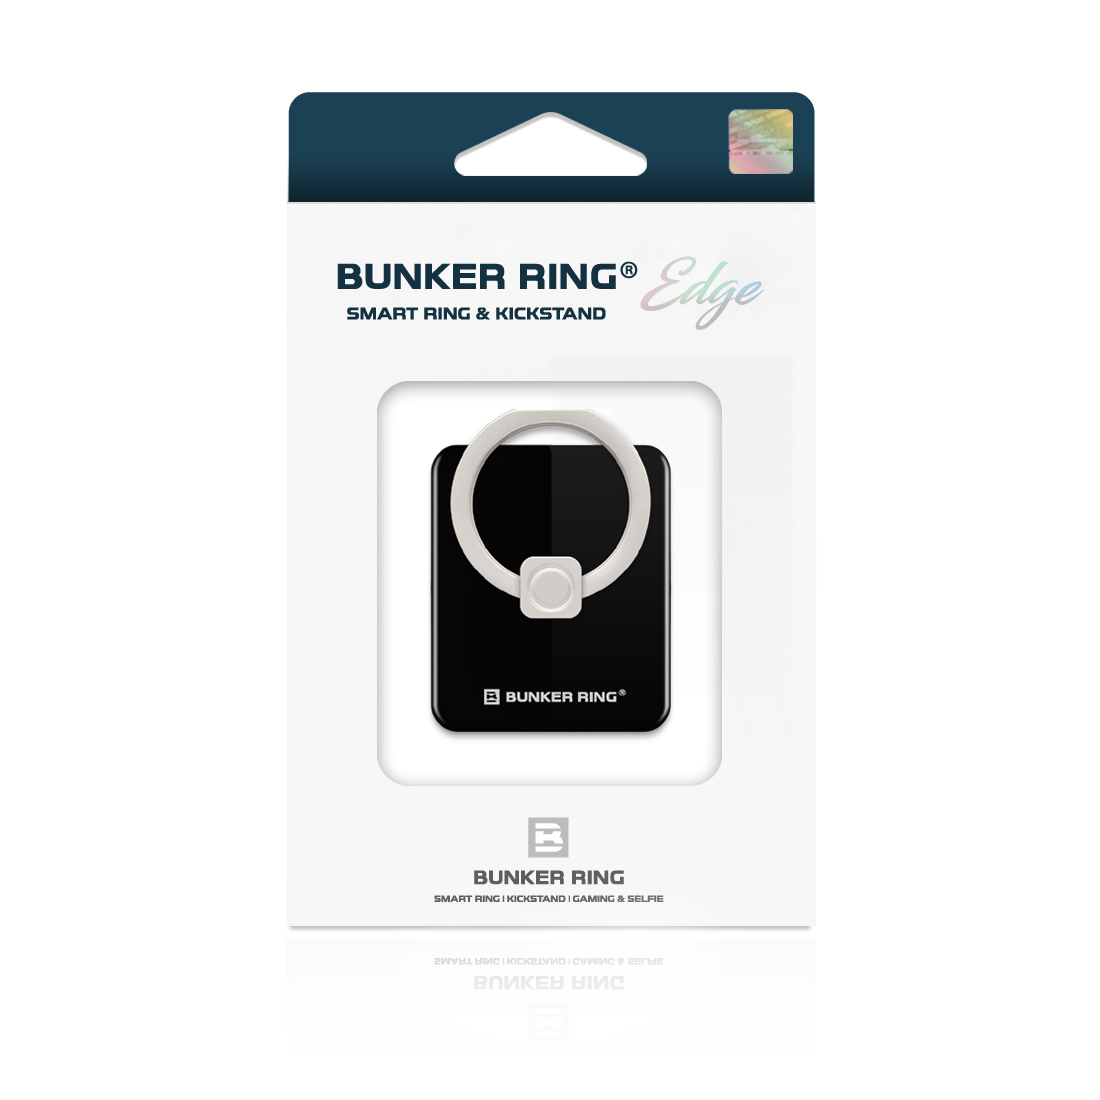 Bunker Ring Edge Jet Black Bunker Ring Iphoneケースは Unicase